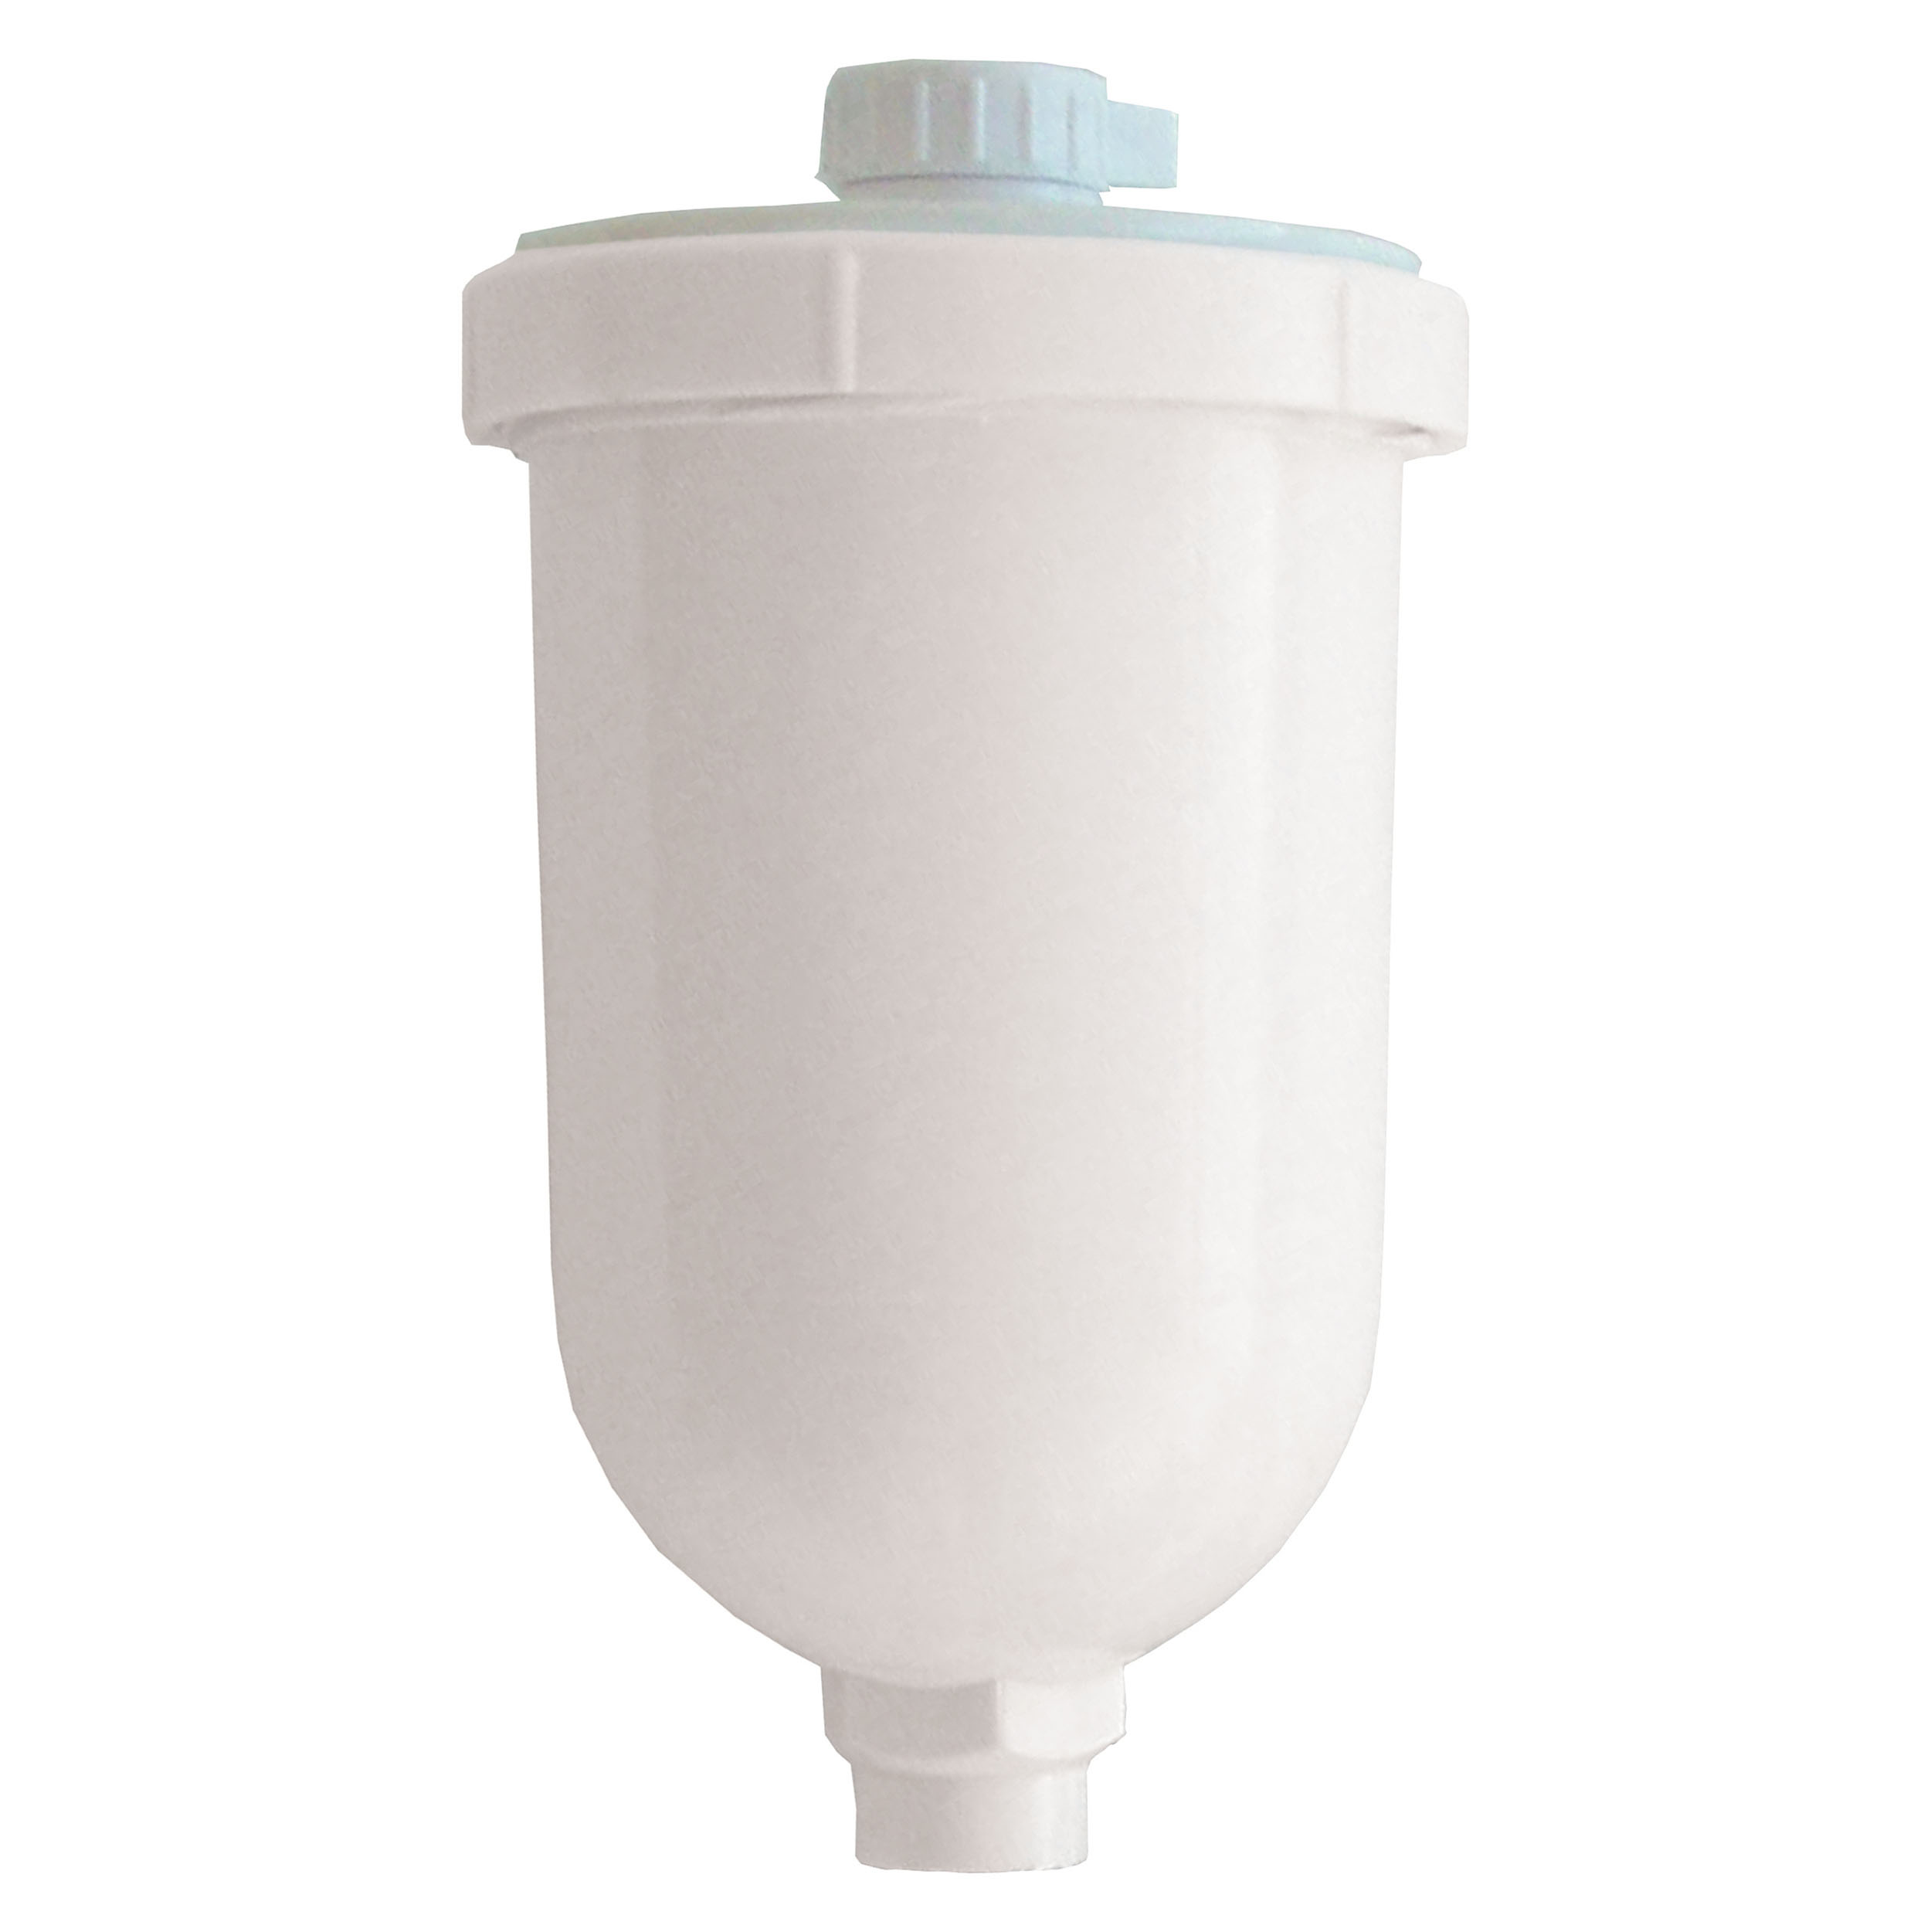 Gravity cup minipaint for HVLP paint spray guns, complete, 250 ml, connection thread 8 × 0.75, plastic, lid